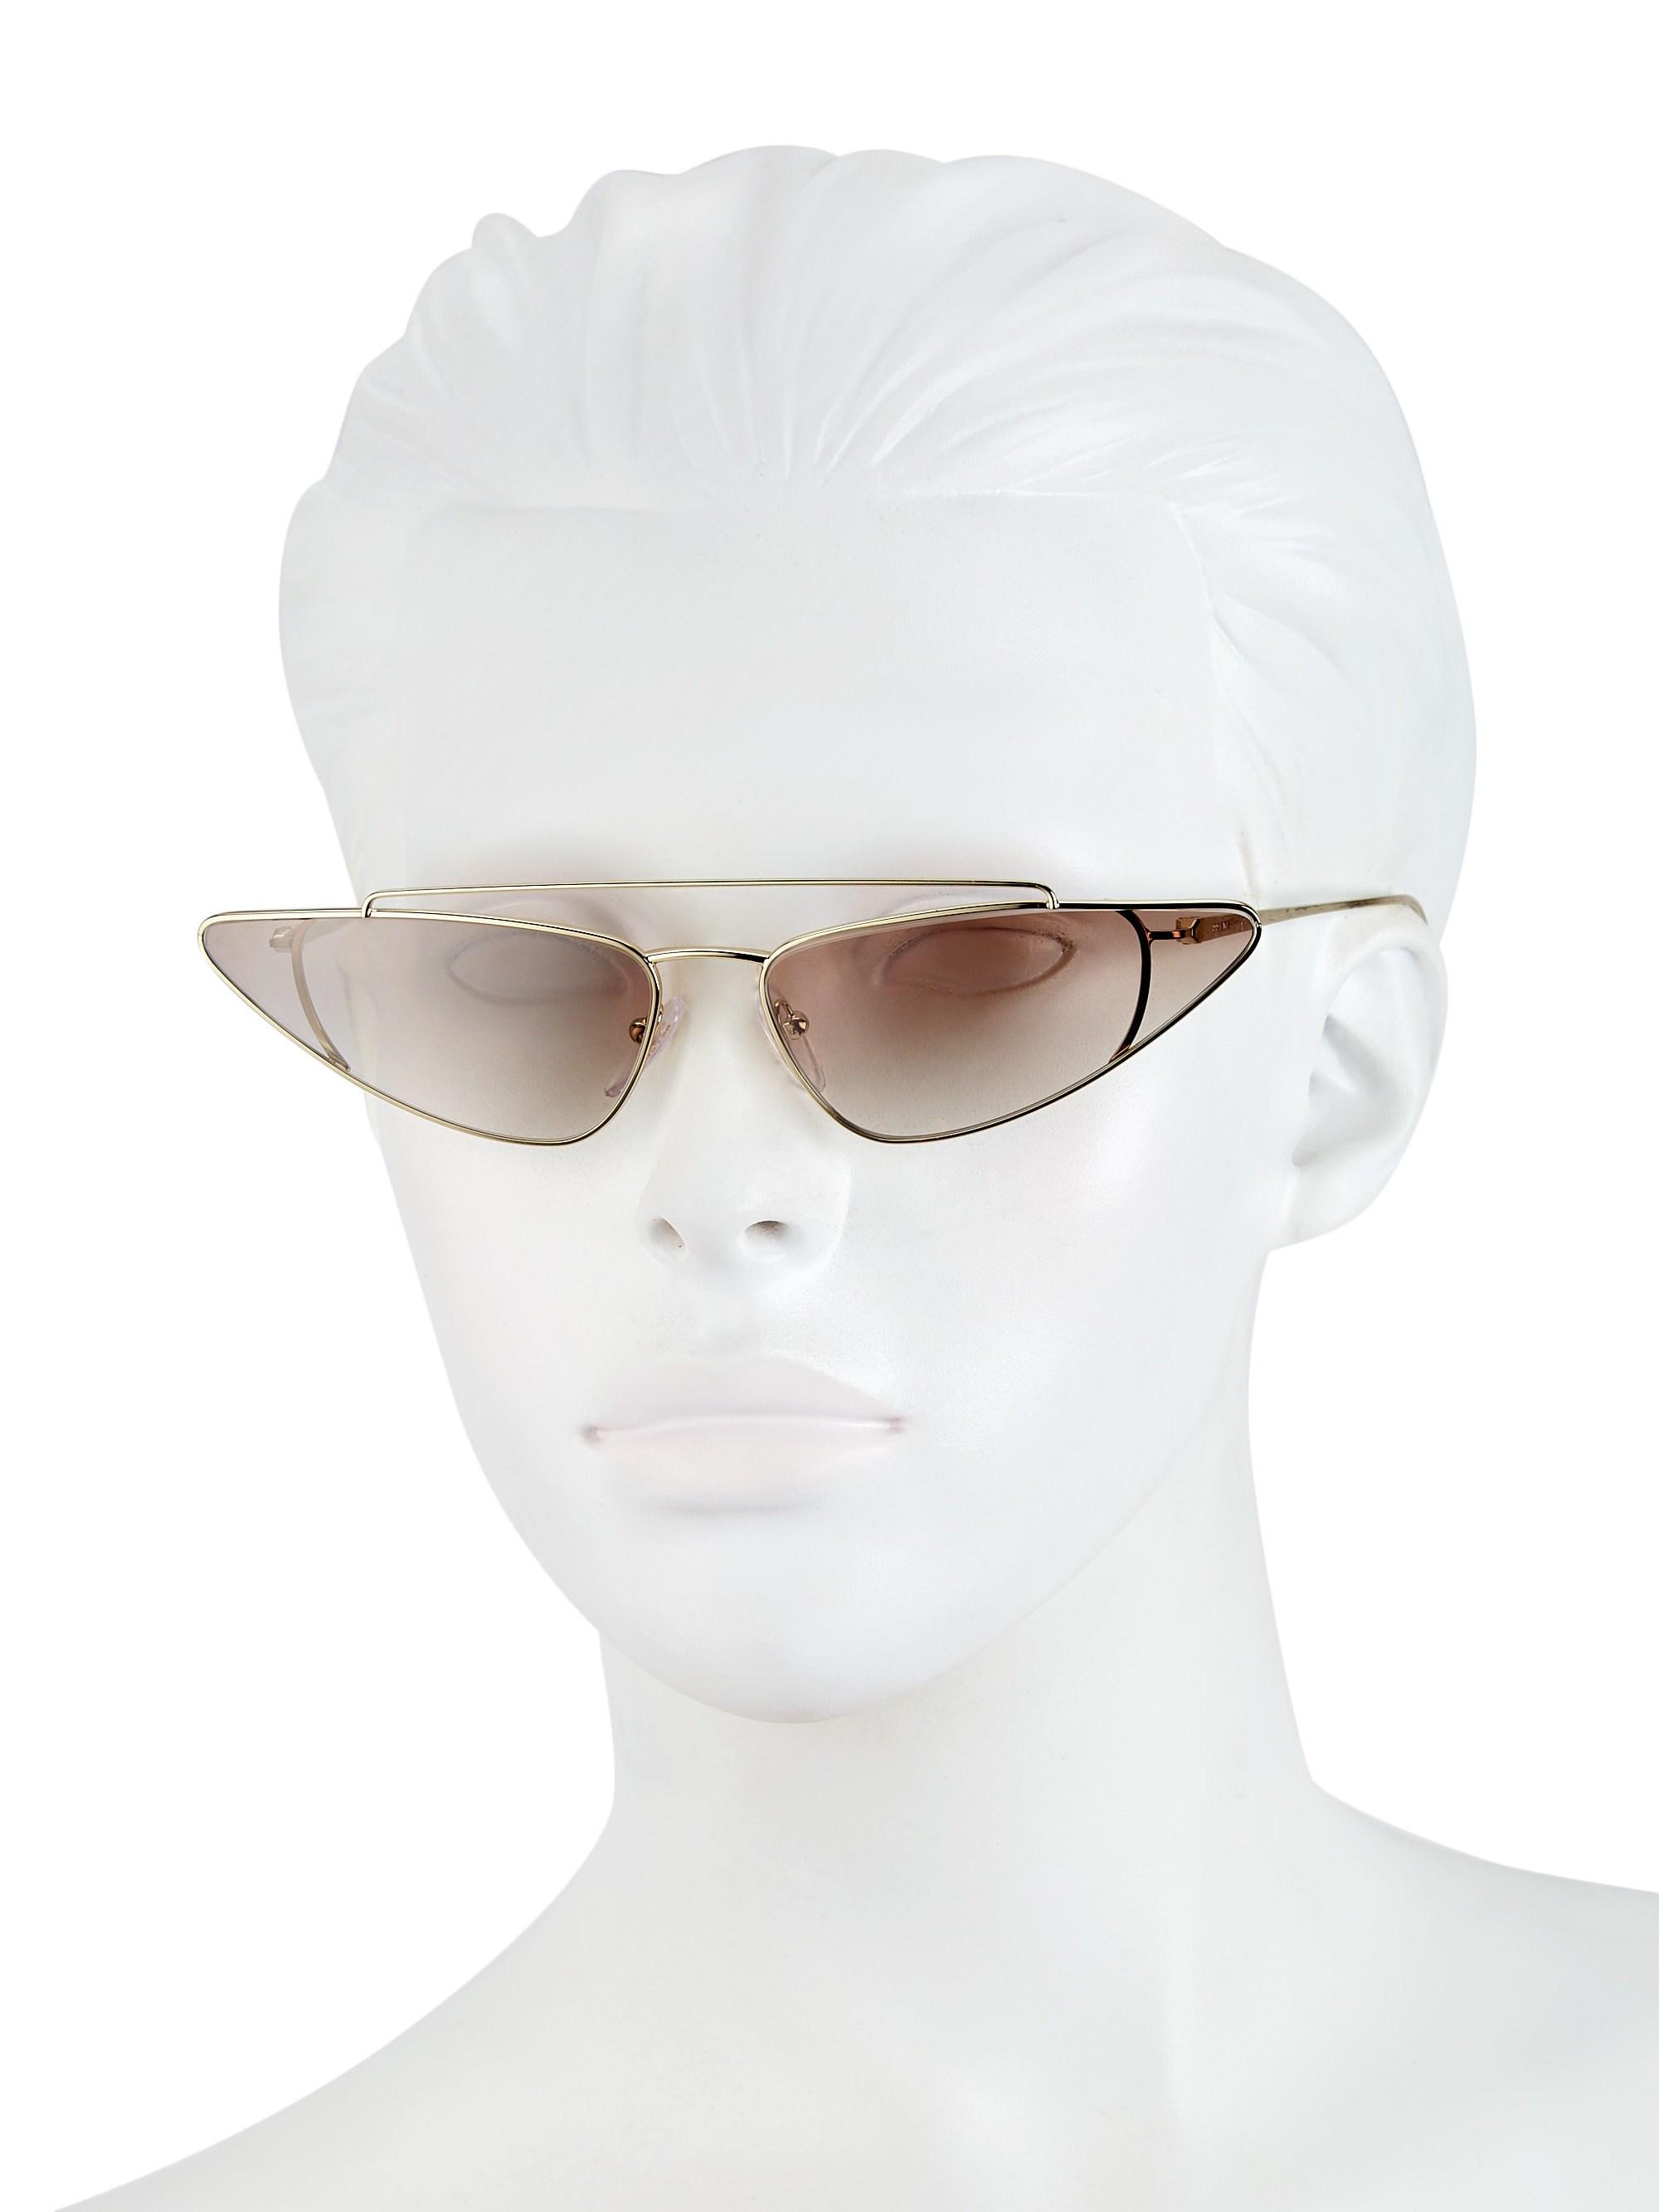 Prada 68mm Cateye Sunglasses in Silver (Metallic) - Lyst